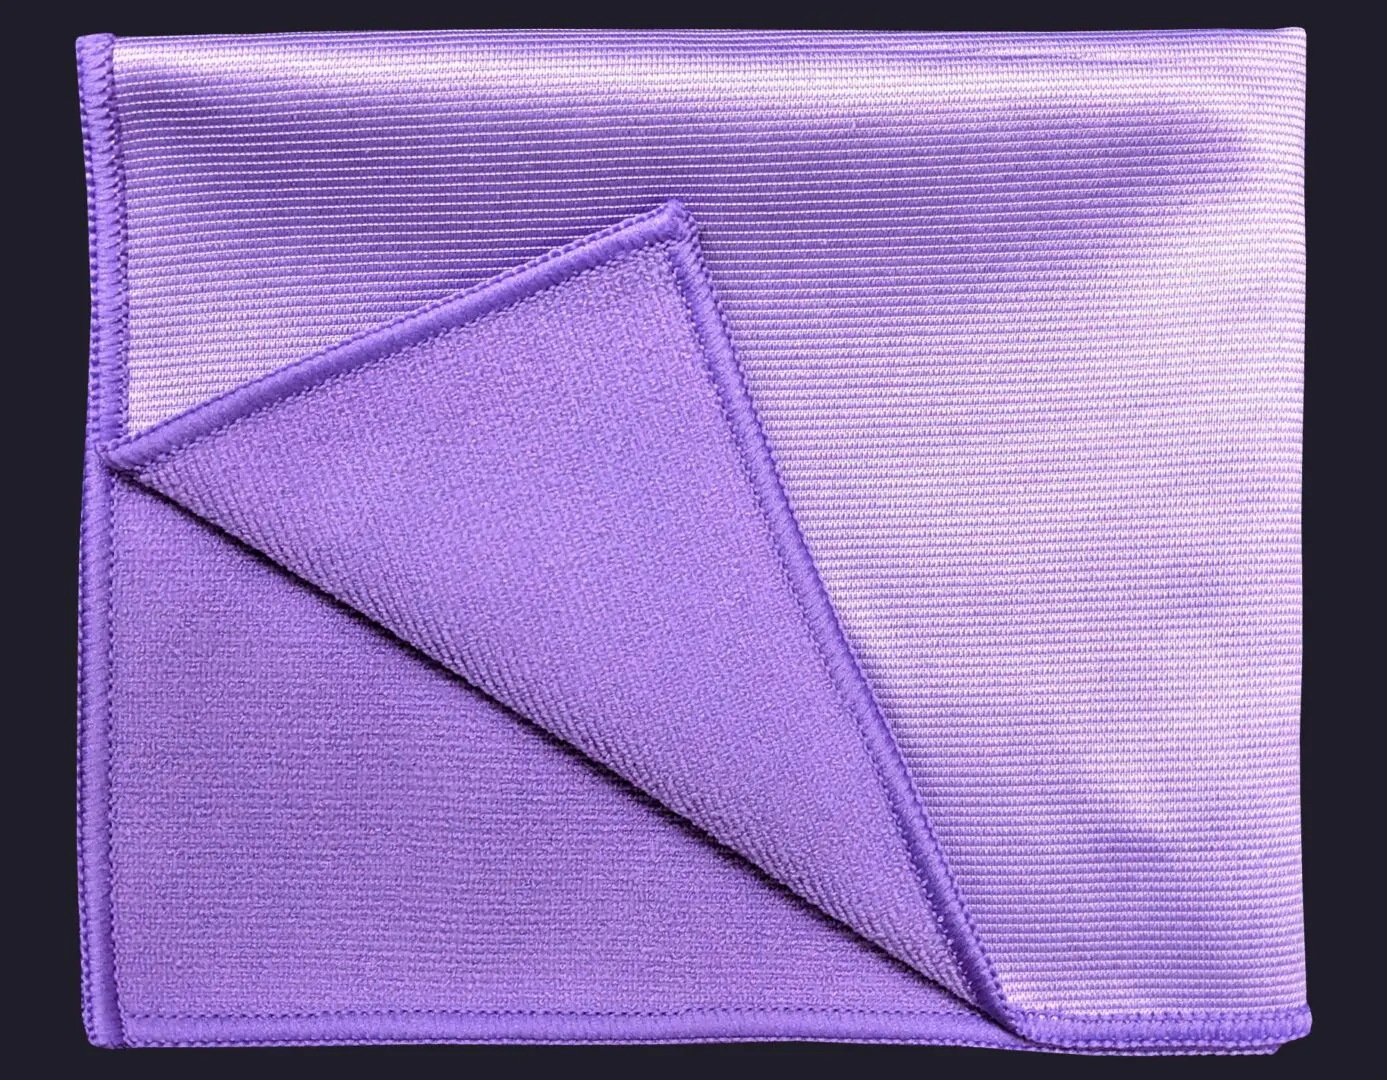 Lavender color cloth folded on navy blue background